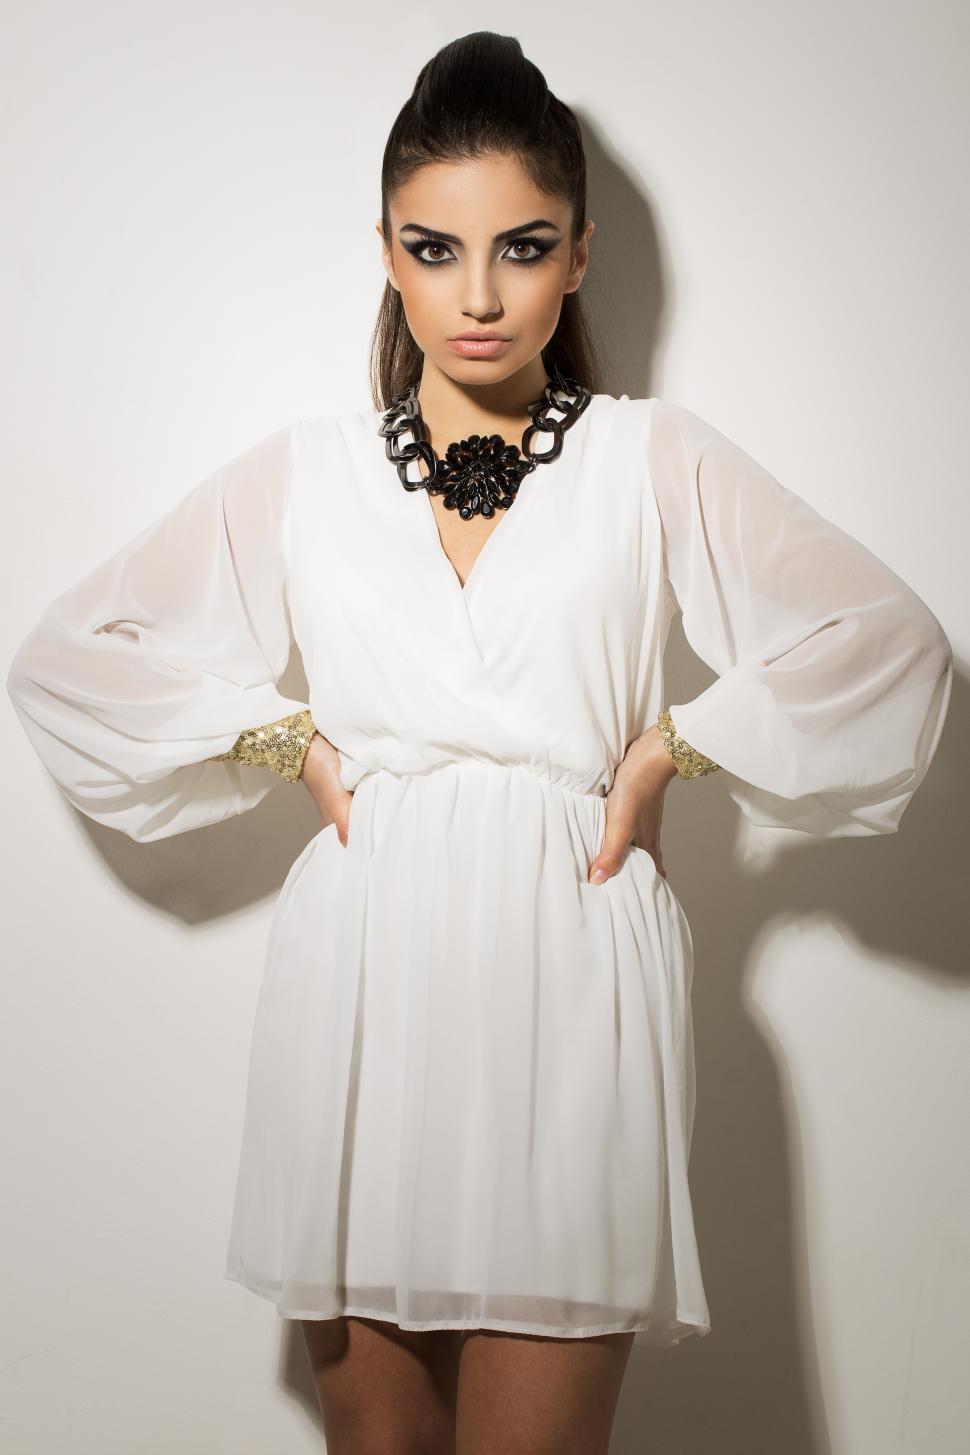 Free Image of Vogue. Beautiful woman posing in fashionable white dress 